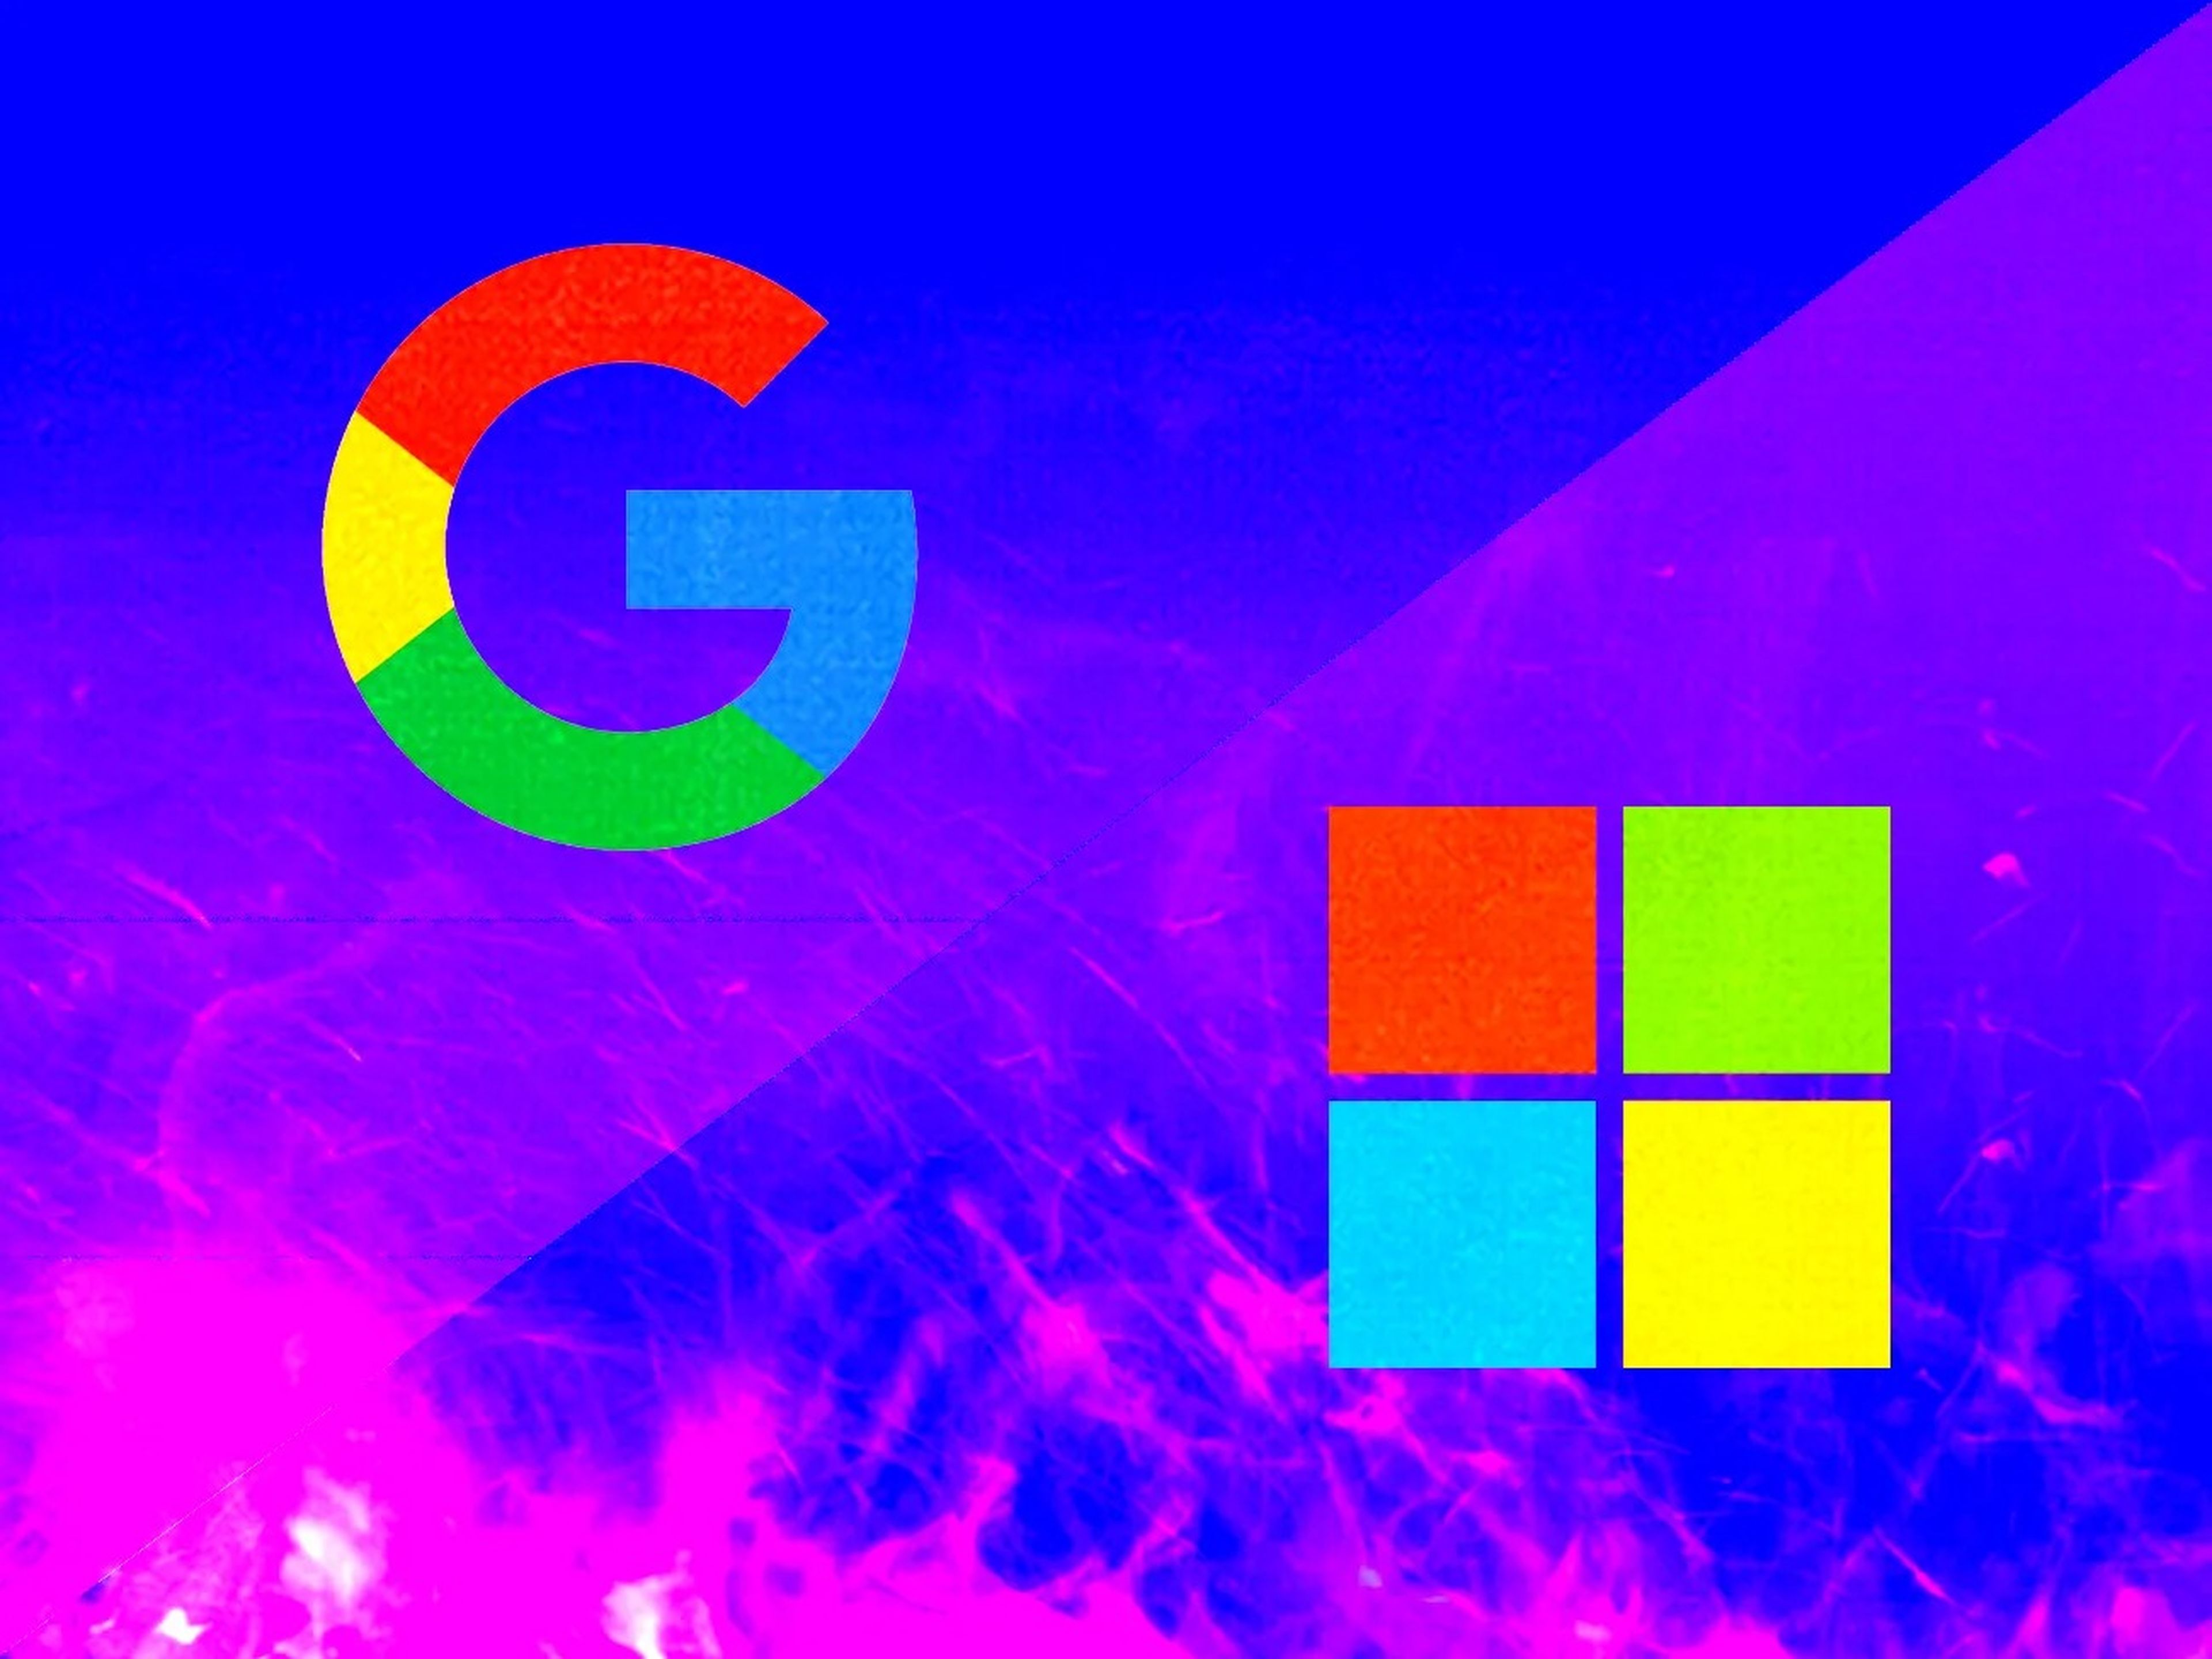 Google logo and Microsoft logo